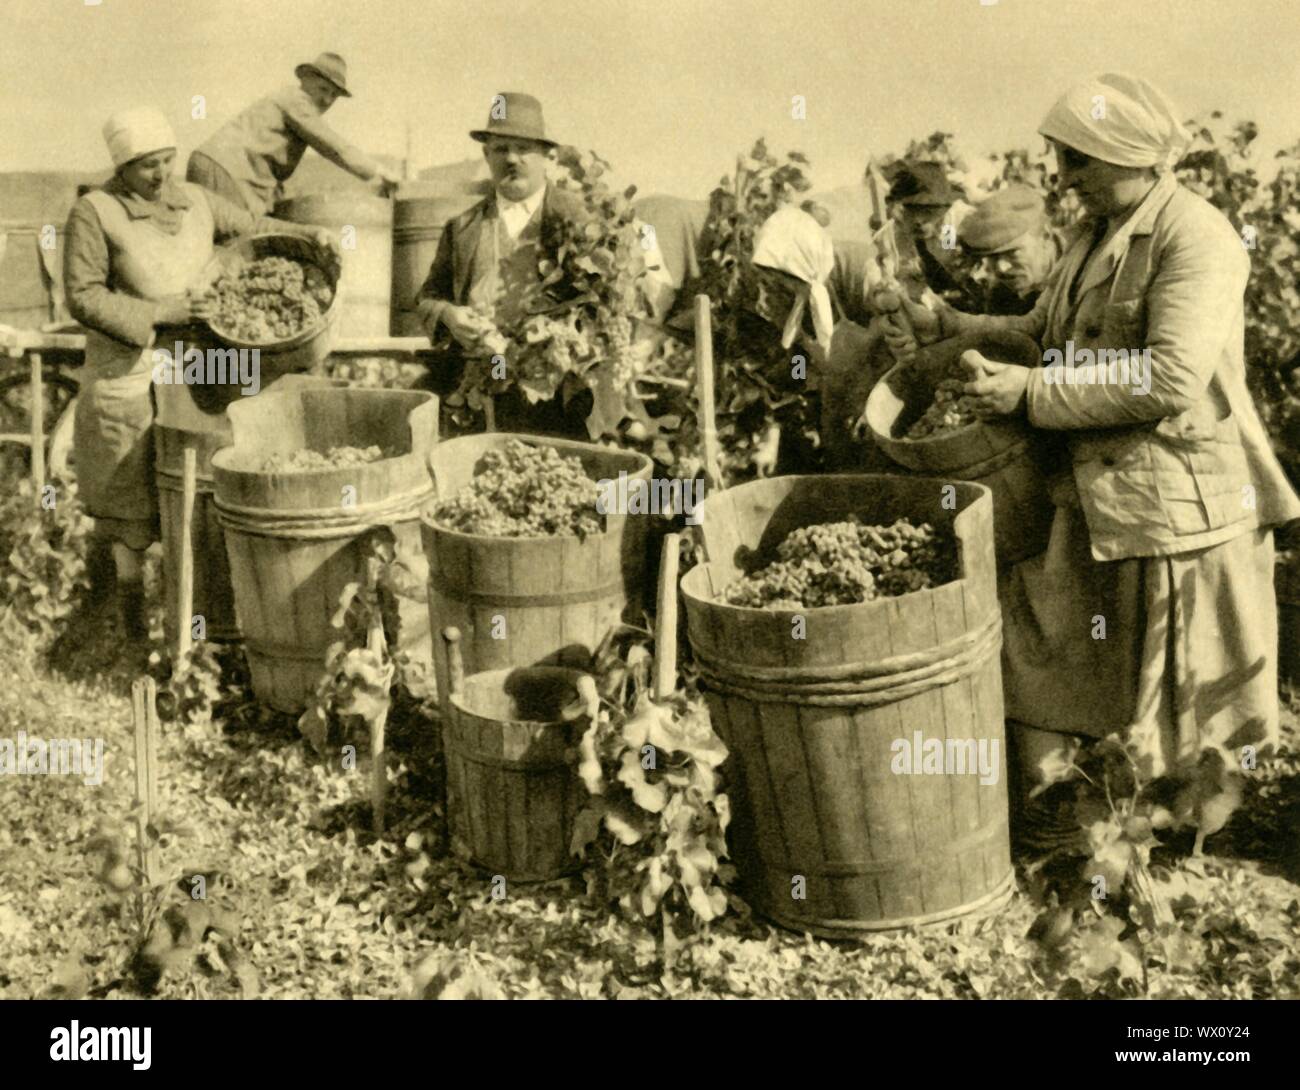 Wine harvest near Baden bei Wien, Lower Austria, c1935. Grapes for wine-making are gathered in wooden tubs. From &quot;&#xd6;sterreich - Land Und Volk&quot;, (Austria, Land and People). [R. Lechner (Wilhelm M&#xfc;ller), Vienna, c1935] Stock Photo